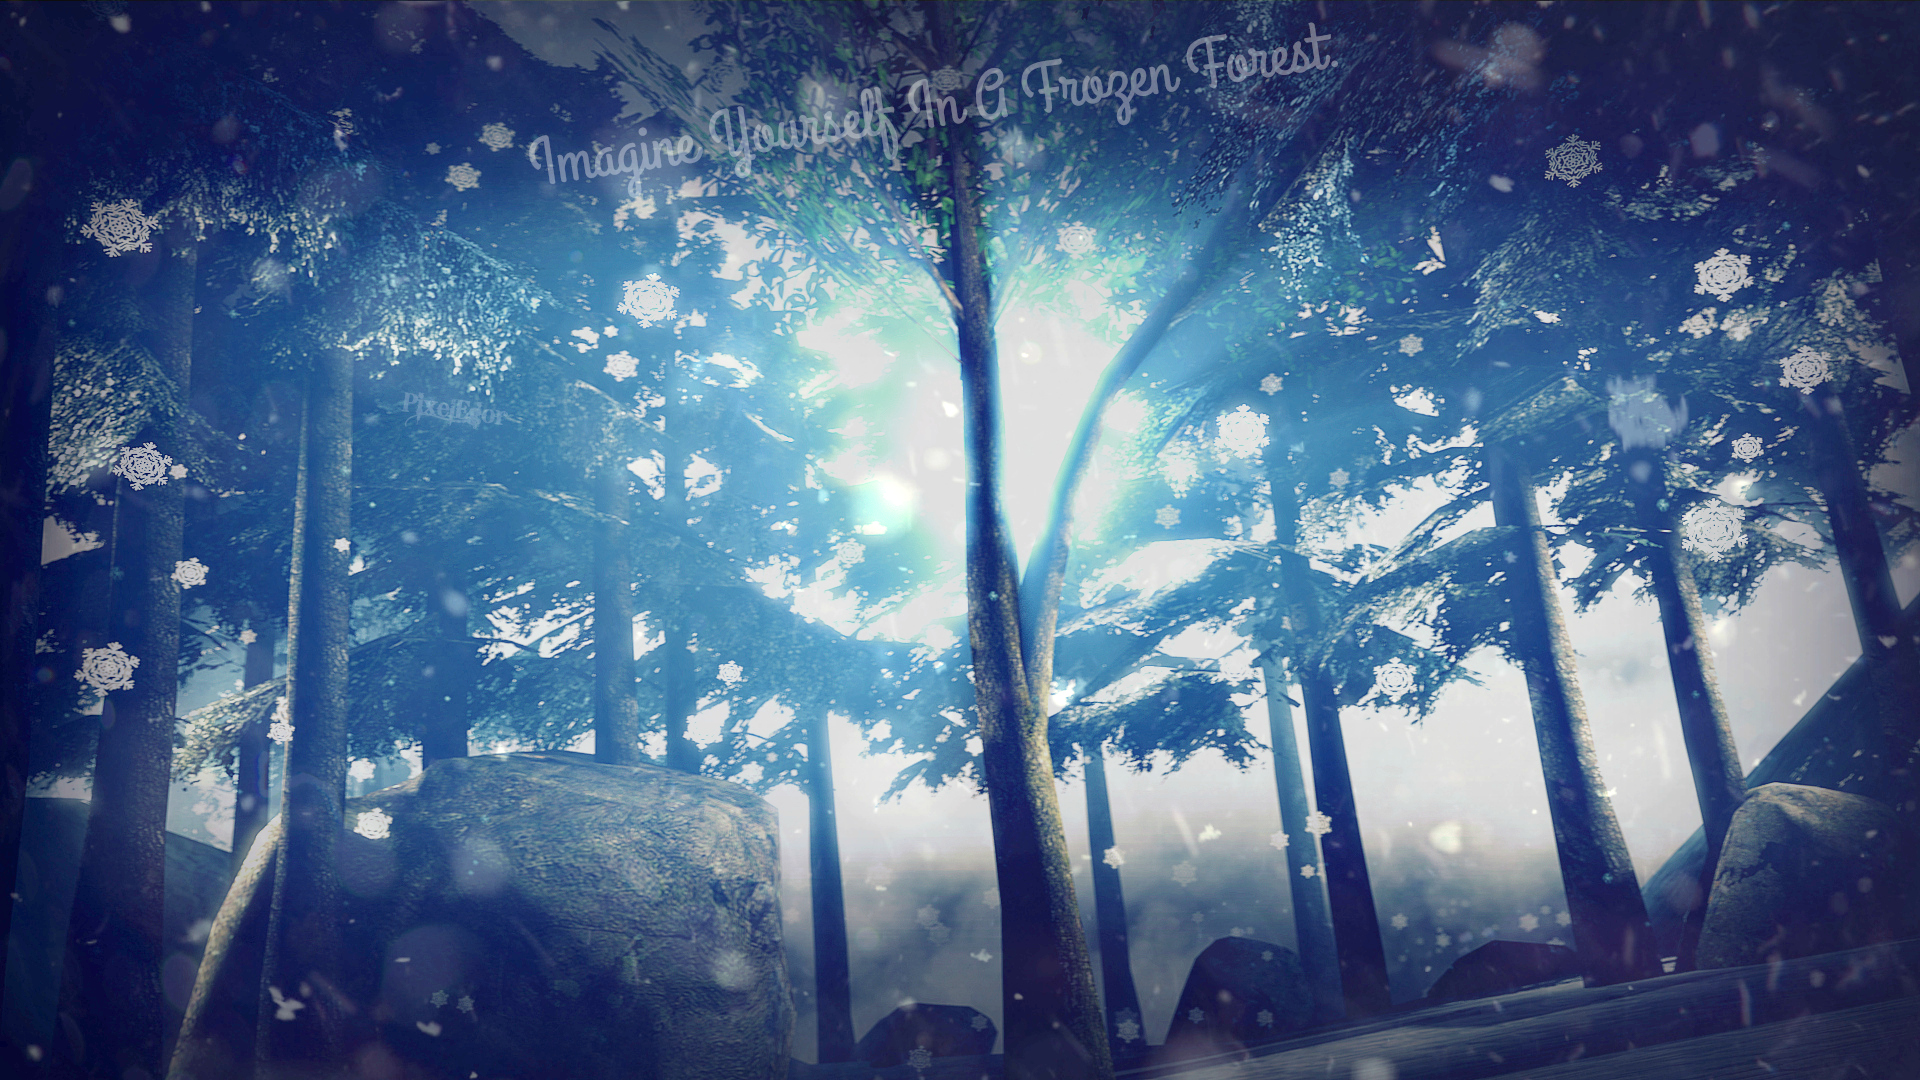 SFM) Imagine Yourself In A Frozen Forest by PixelEgor on DeviantArt